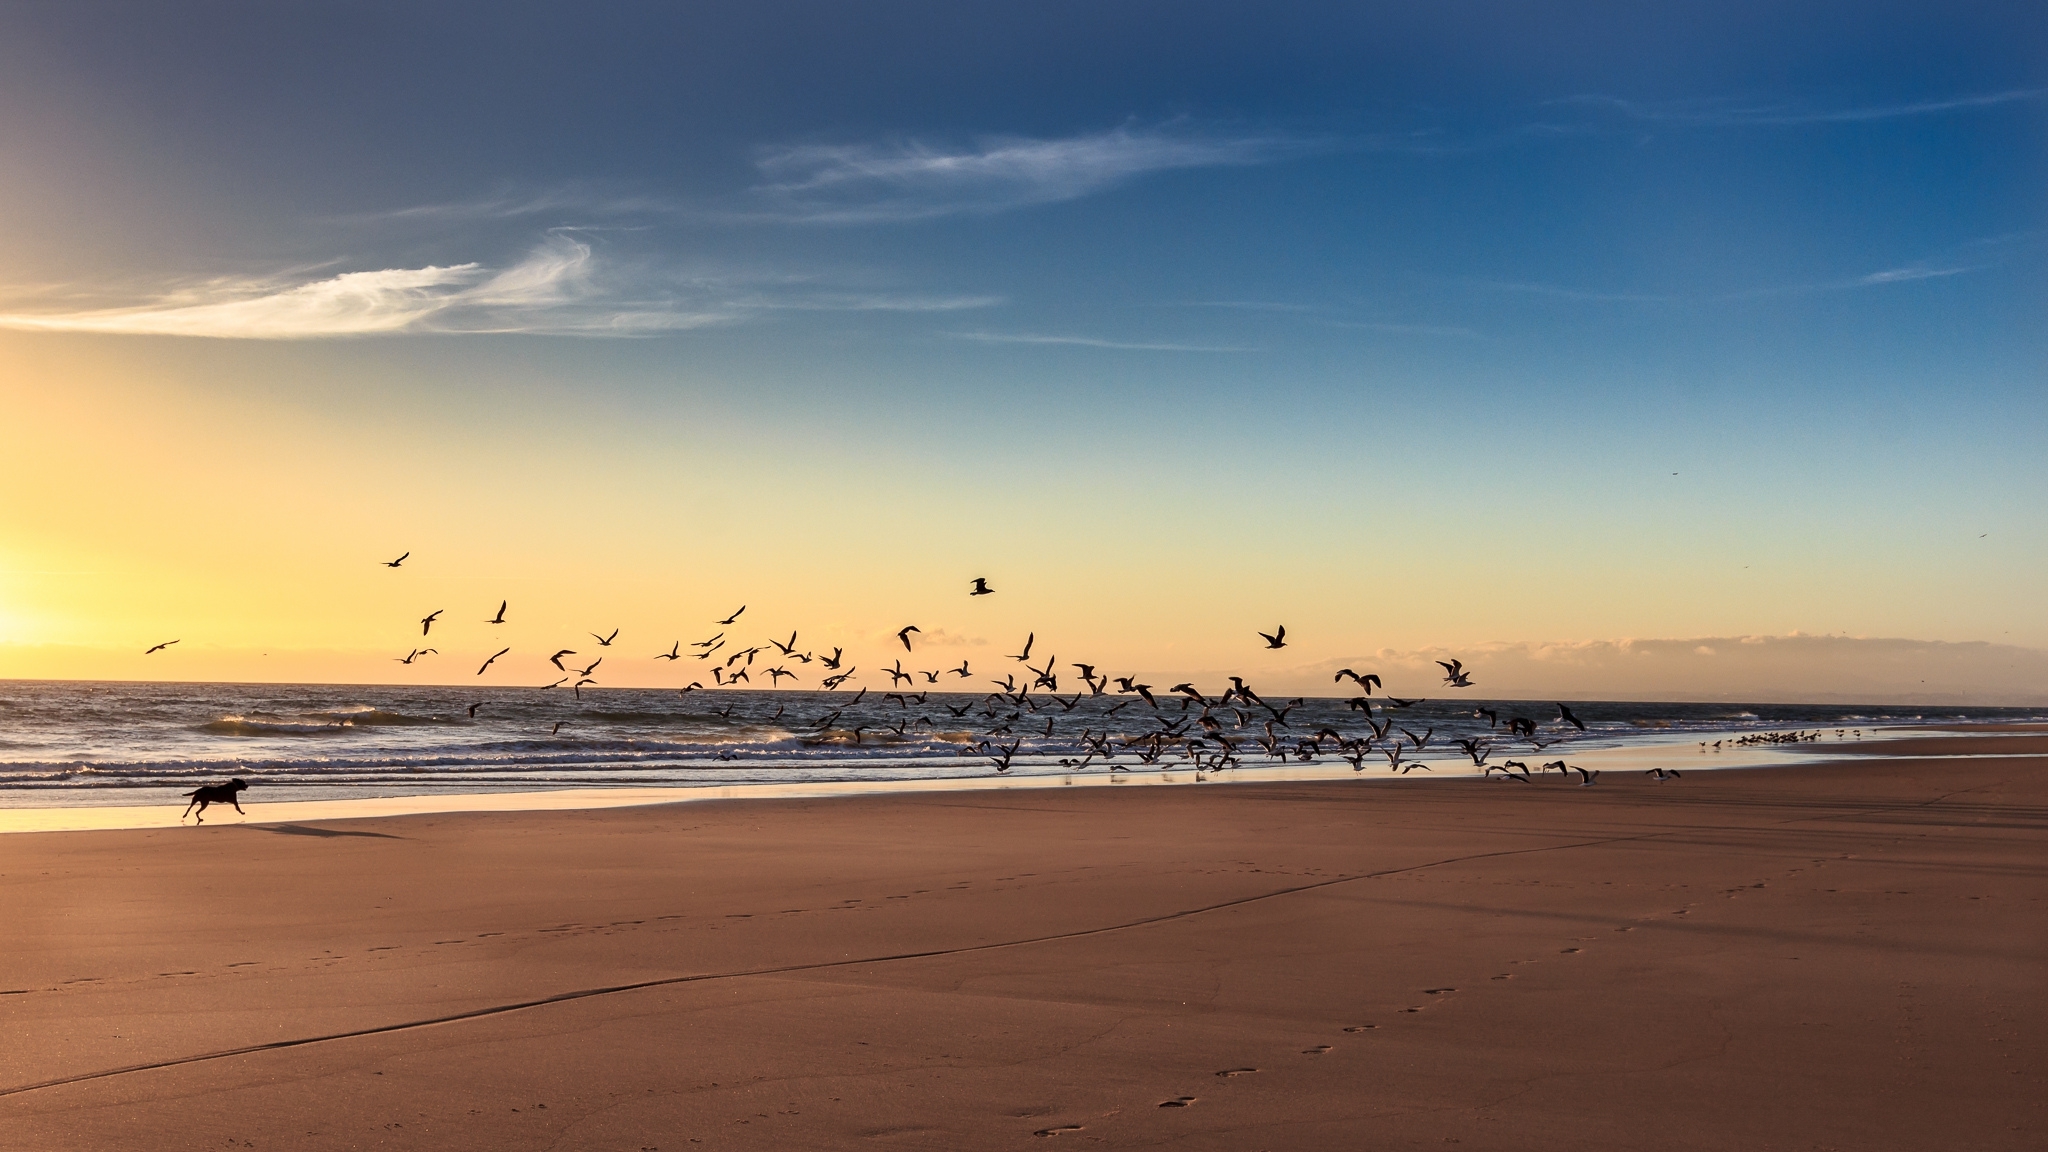 Landscape, sea, winter, beach, seagulls, black dog, picture